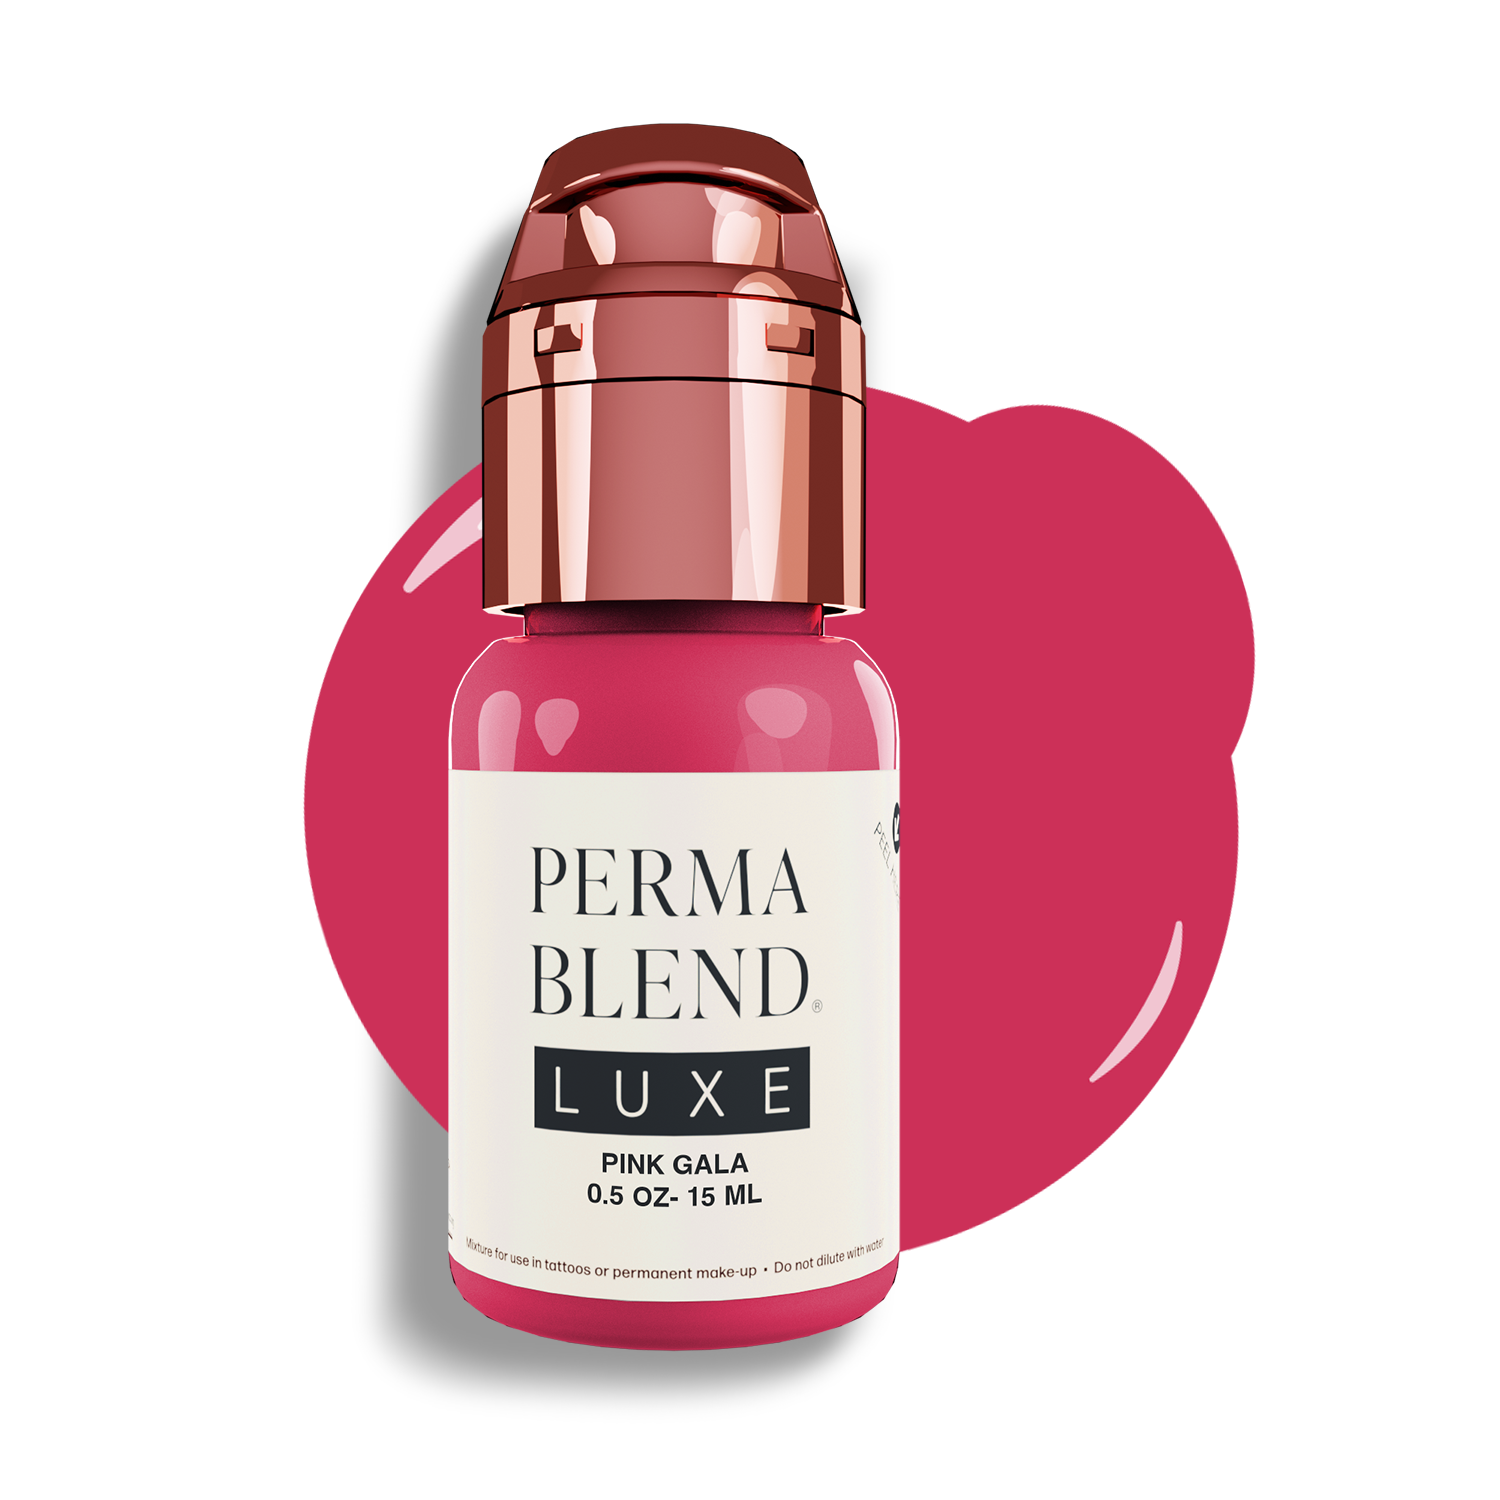 Perma Blend Luxe PMU Ink | Pink Gala | Lips